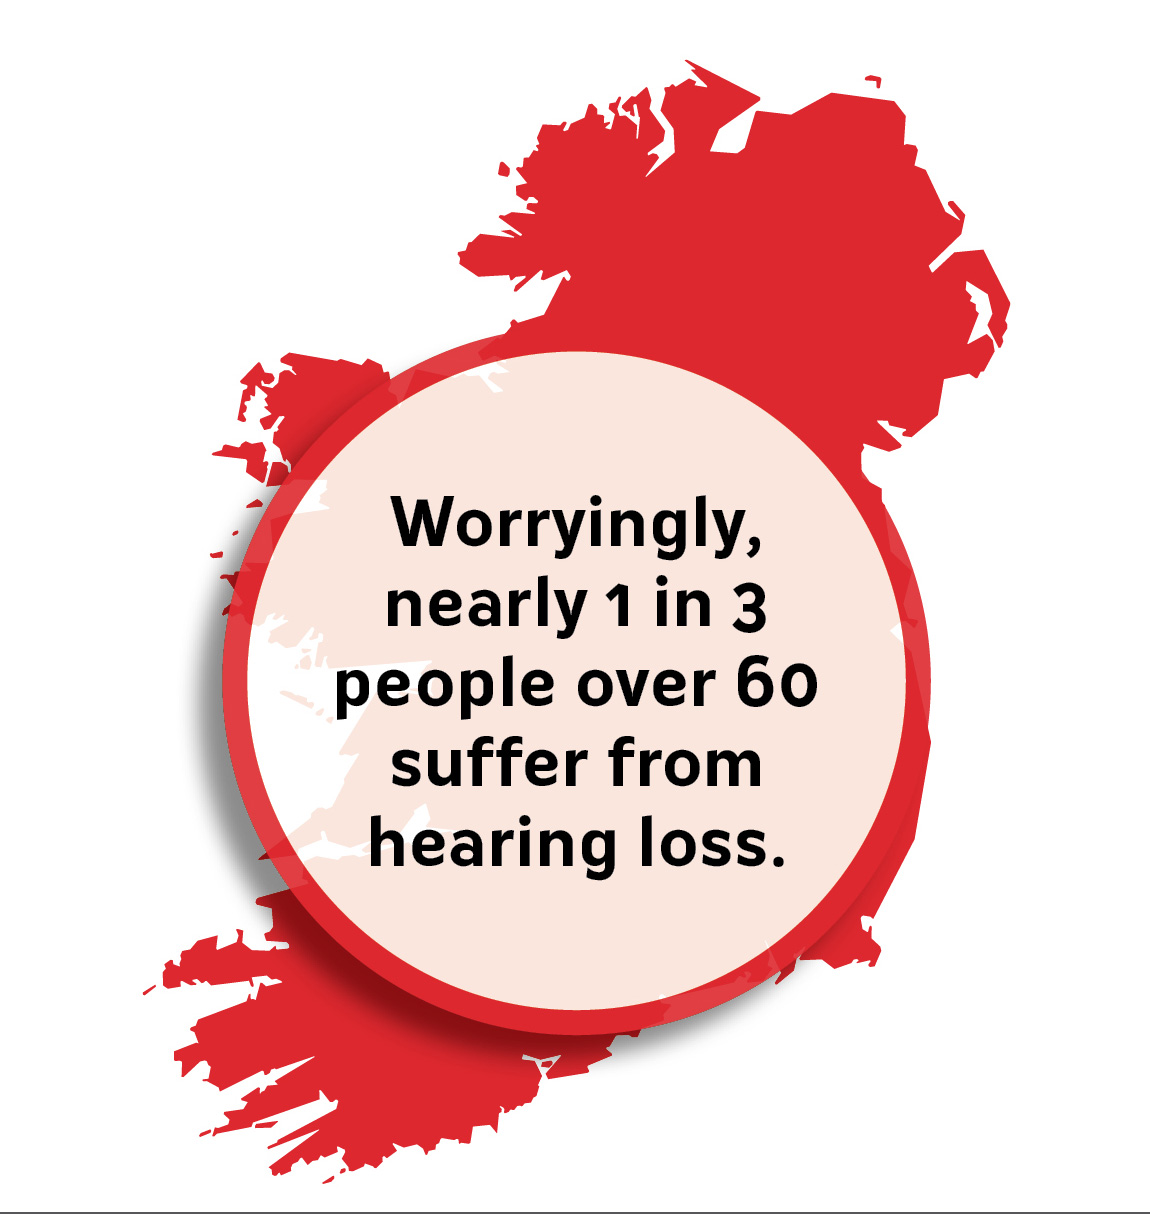 Hearing loss statistics in Nothern Ireland